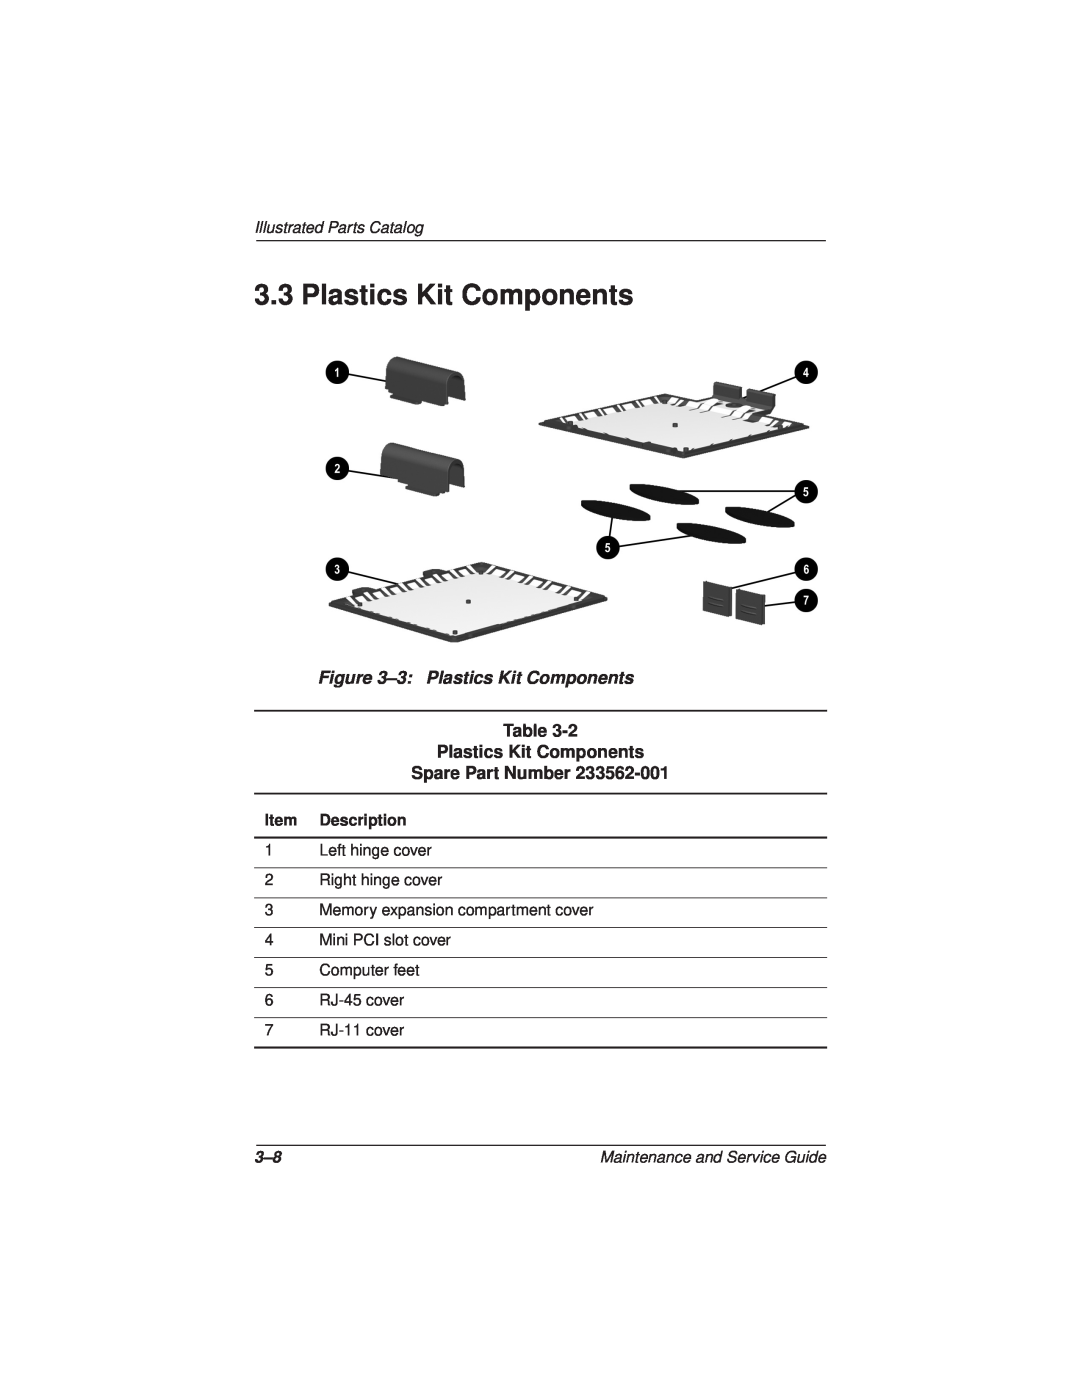 Compaq N110 manual 3 Plastics Kit Components, Plastics Kit Components Spare Part Number, Illustrated Parts Catalog 